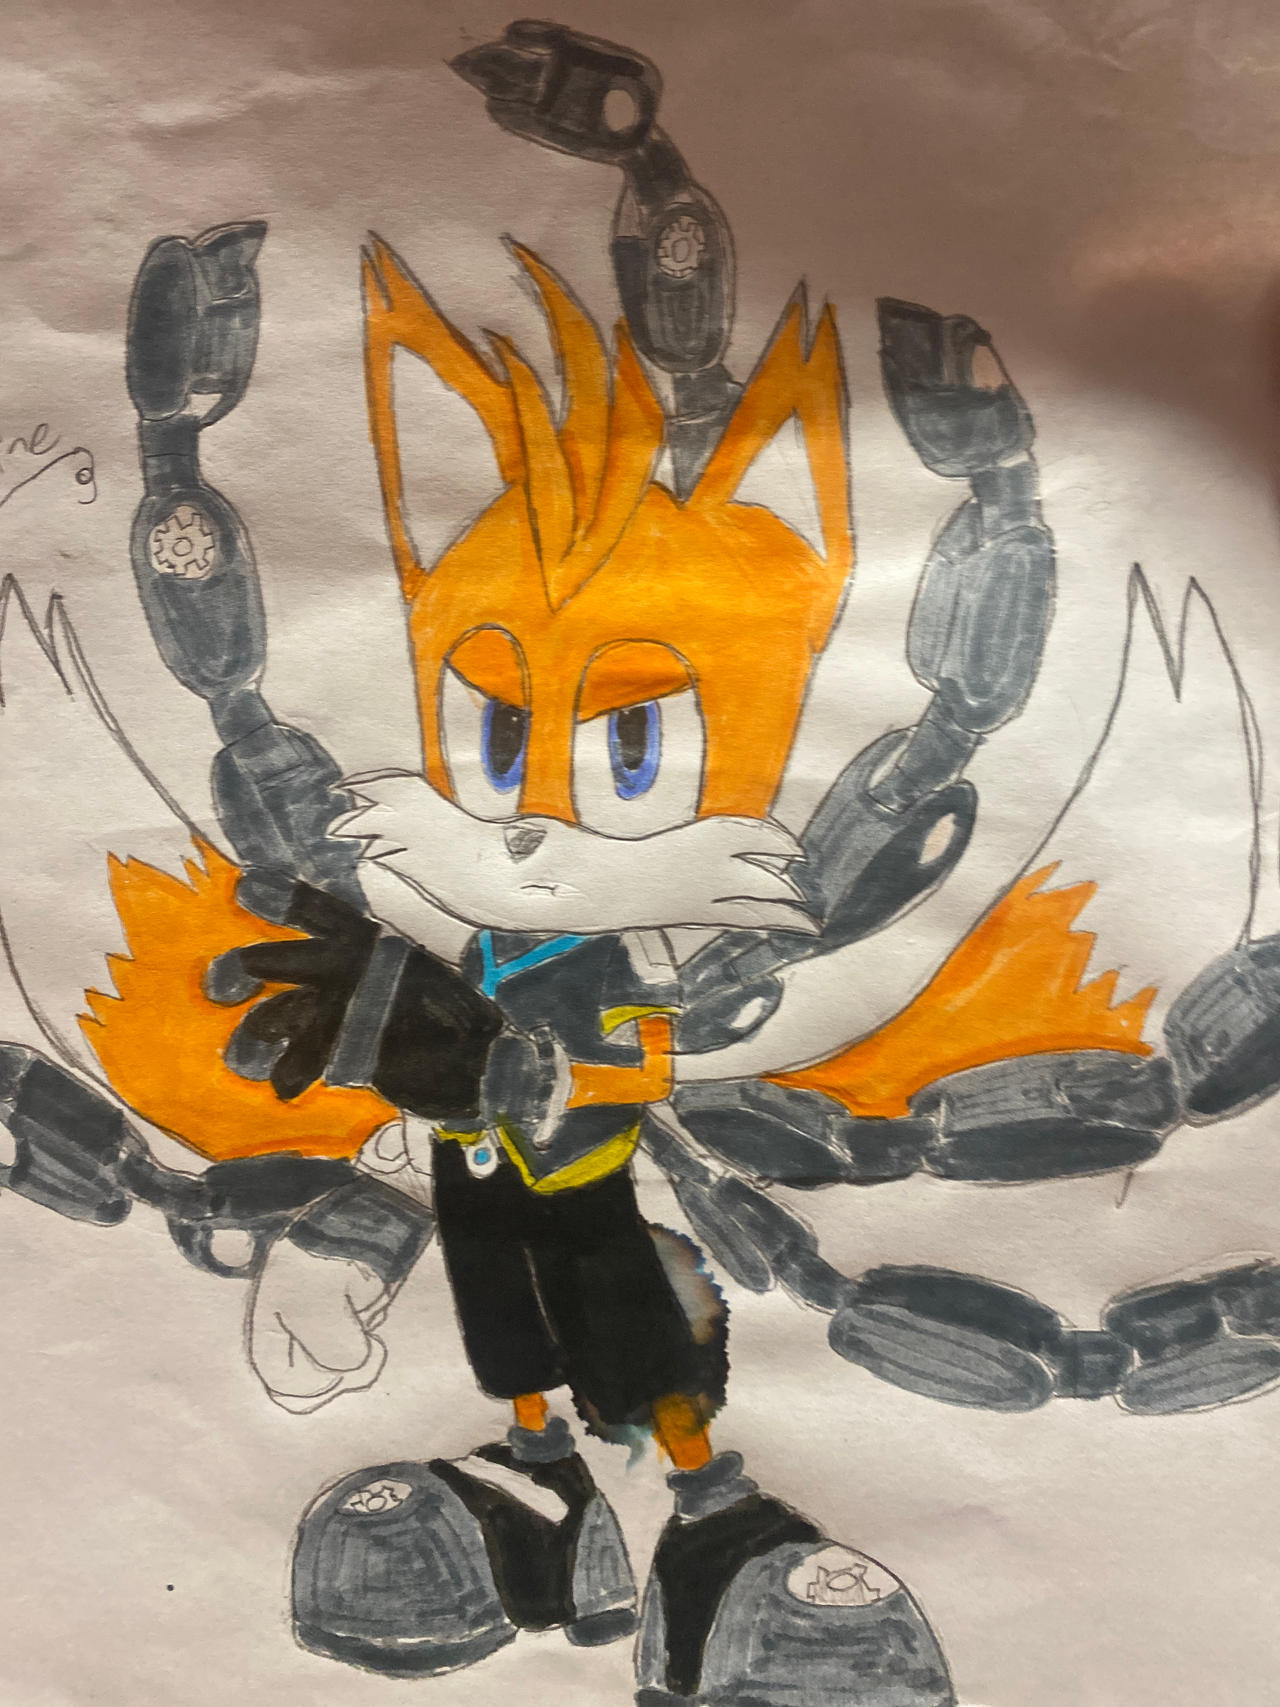 Sonic Prime 5 Nine Tails Action Figure 